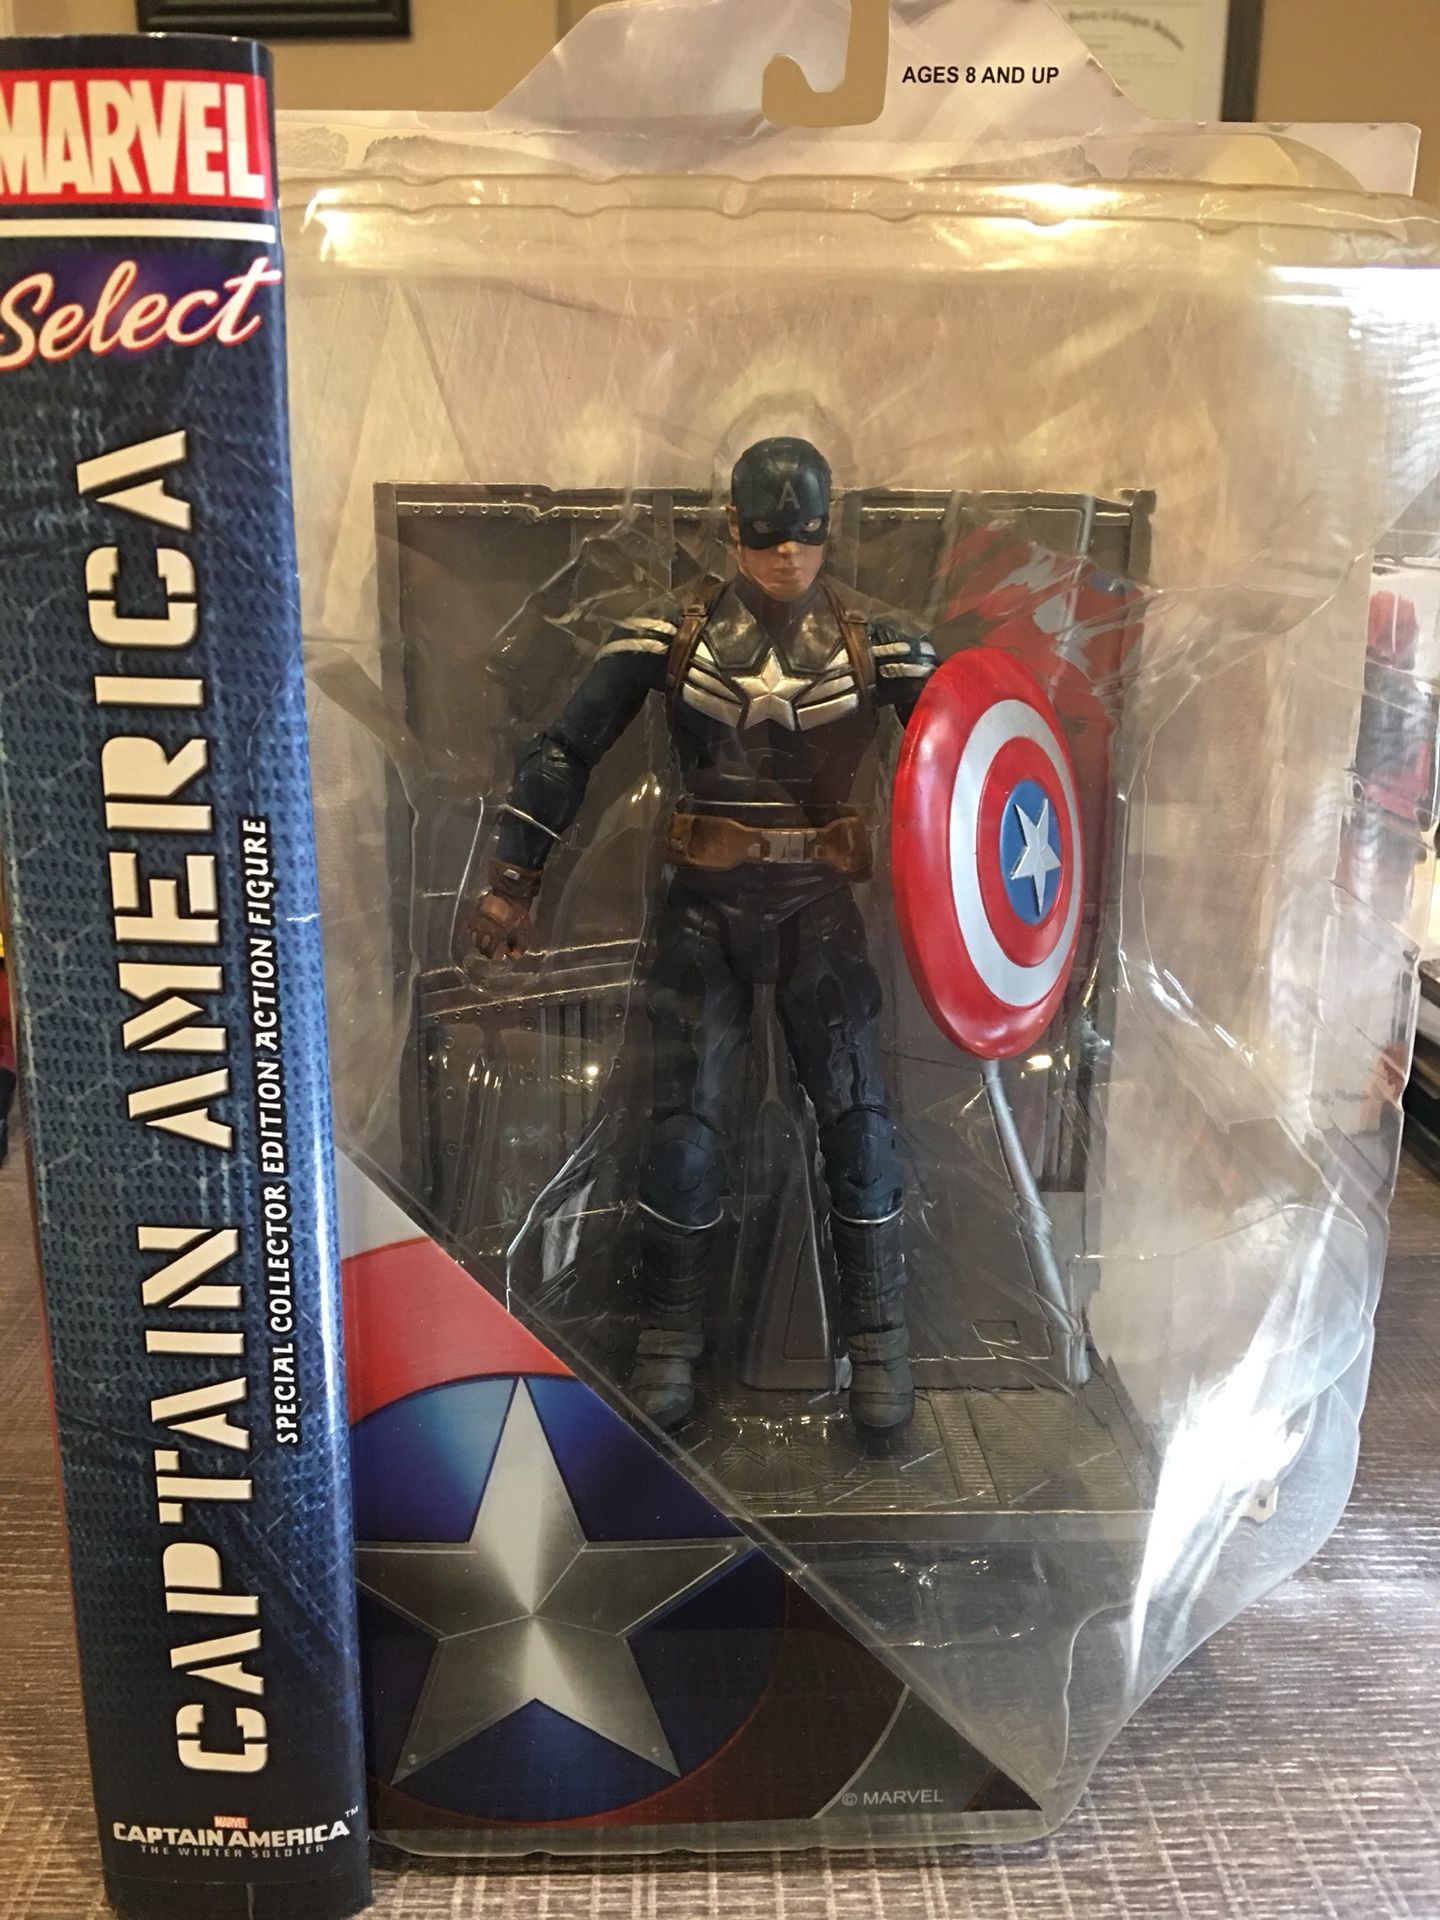 Marvel Select Stealth Captain America Disney Exclusive Figure